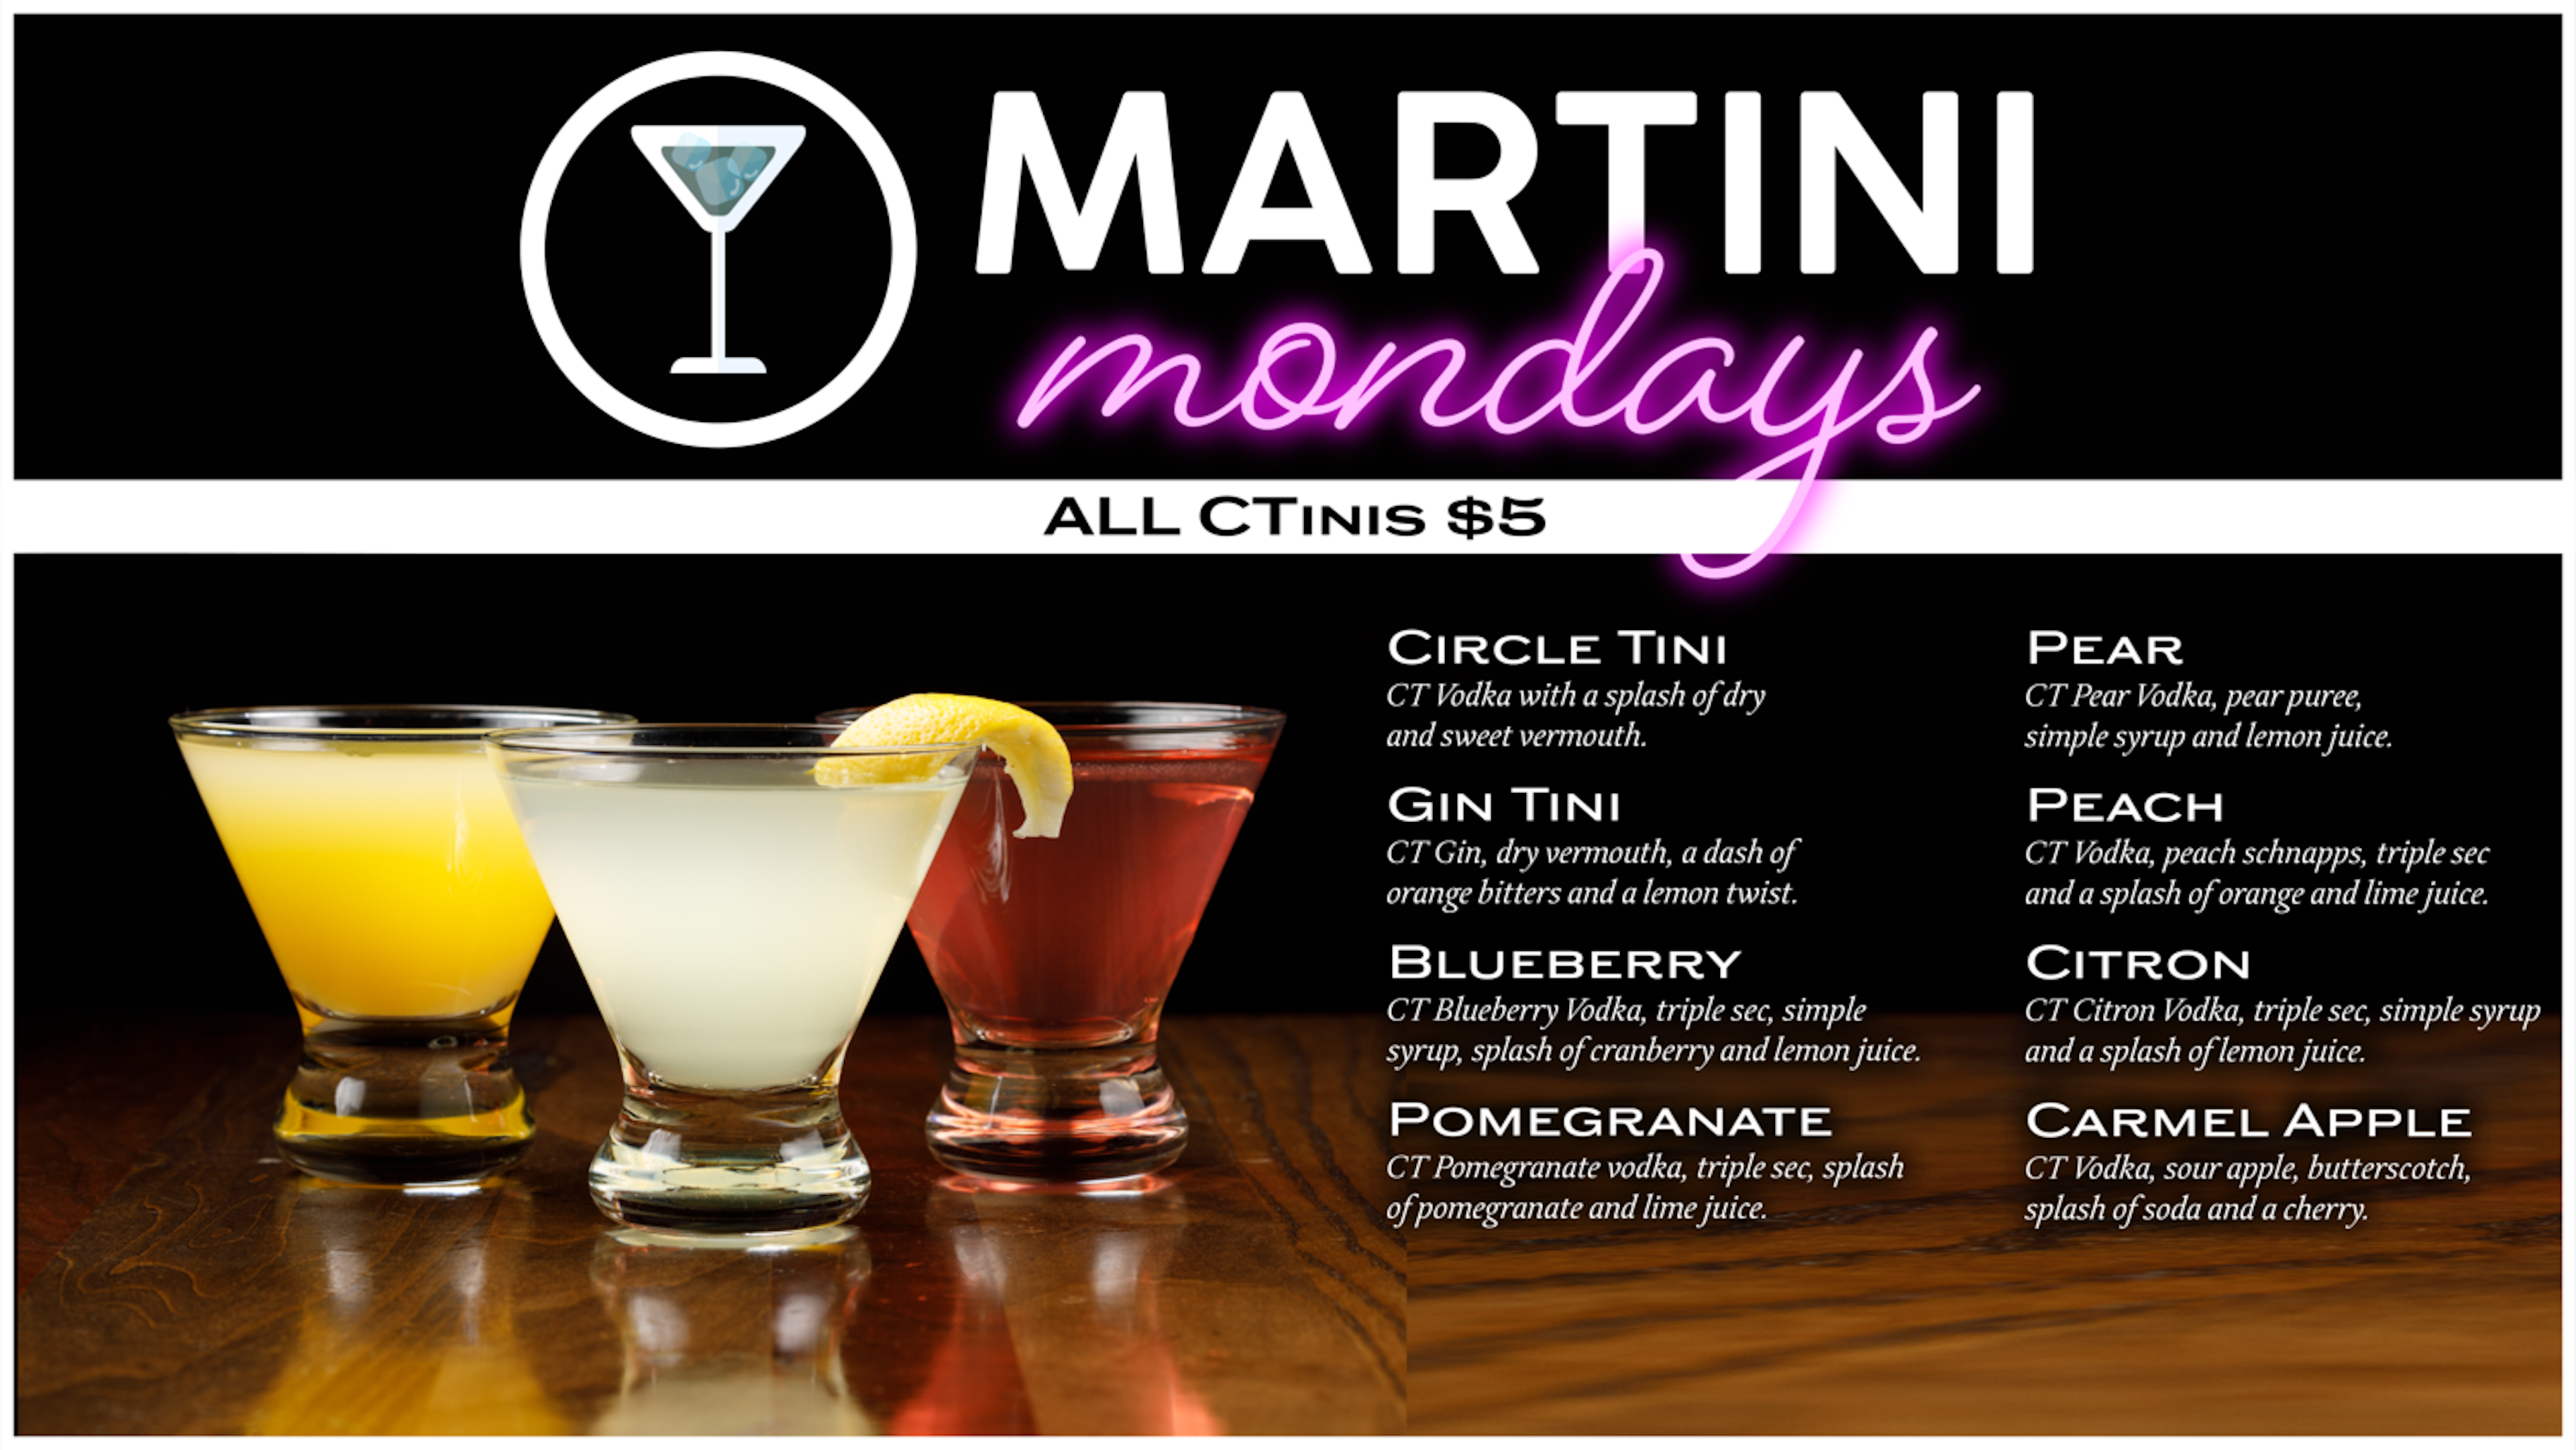 $5 Martinis on Monday